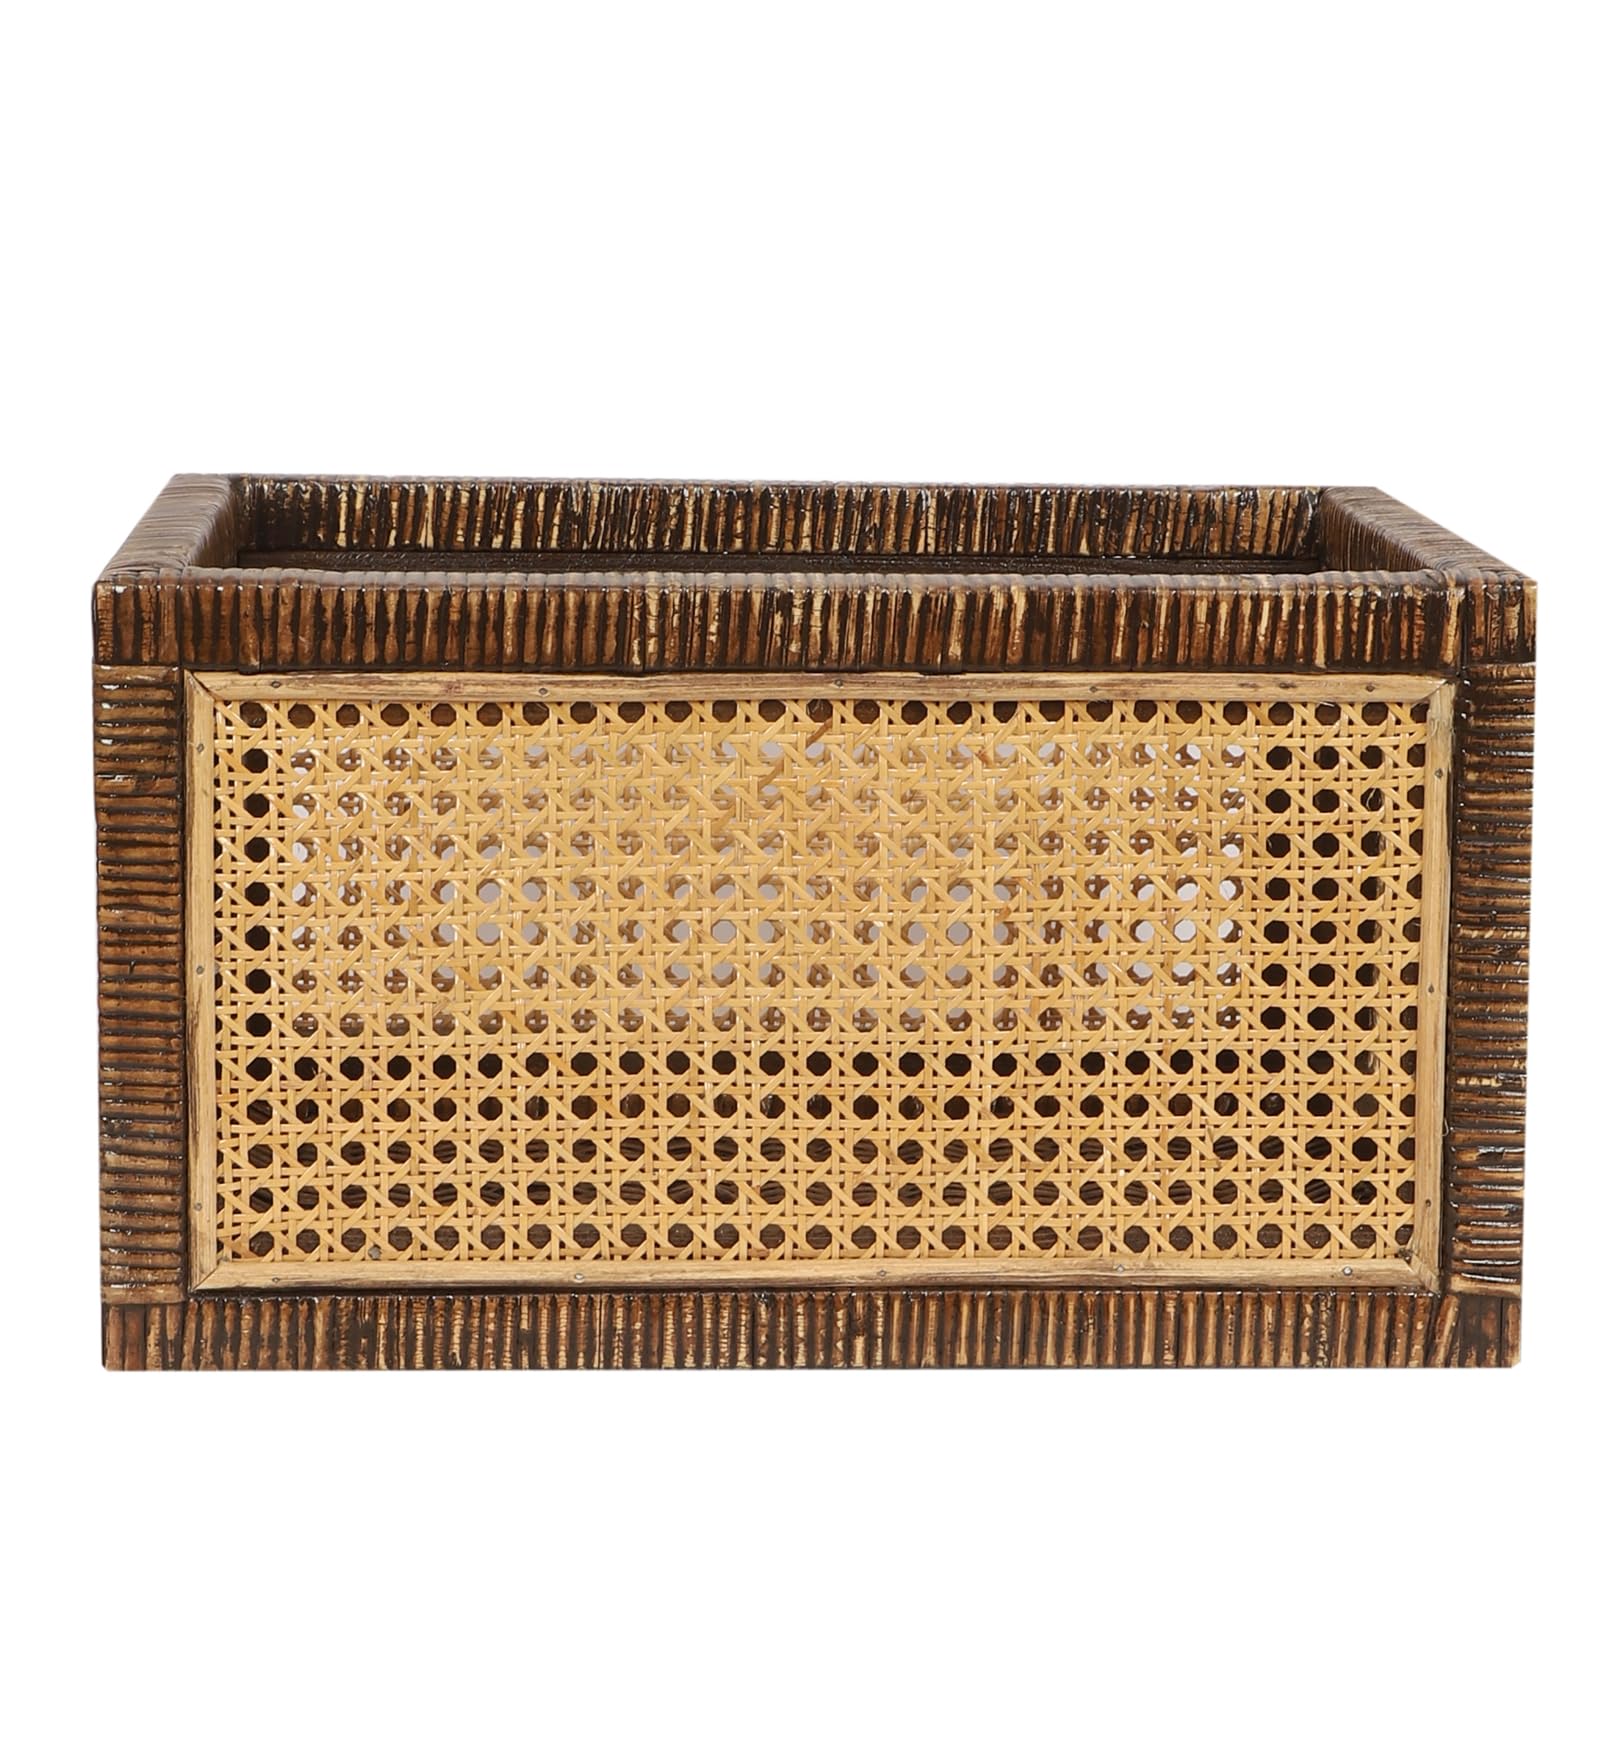 Akway Rattan cane webbing Storage basket | Wicker basket for storage organizer | Kauna Grass storage basket For Home | Kitchn Living Room - (Medium, Beige) - Akway